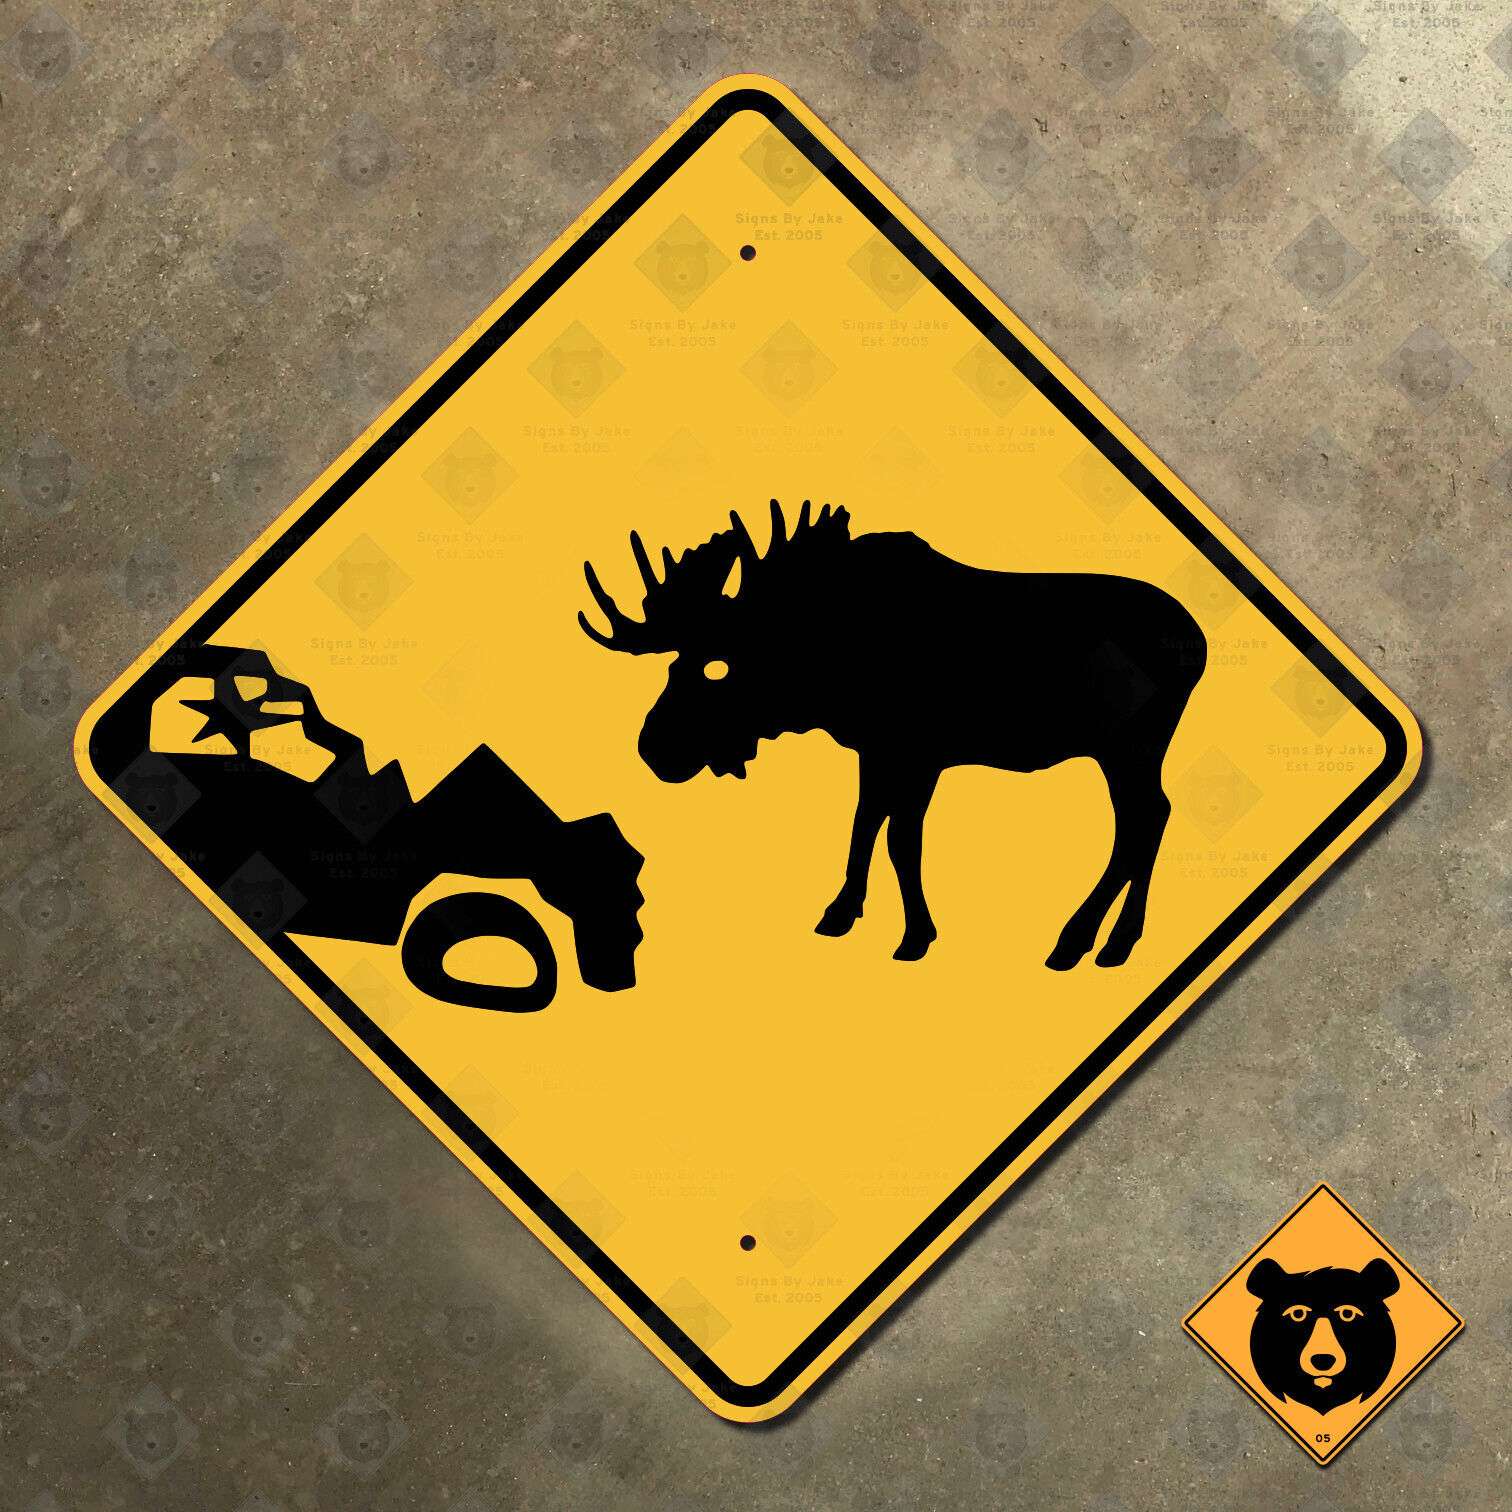 Newfoundland Canada moose warning wrecked car highway marker road sign 12x12